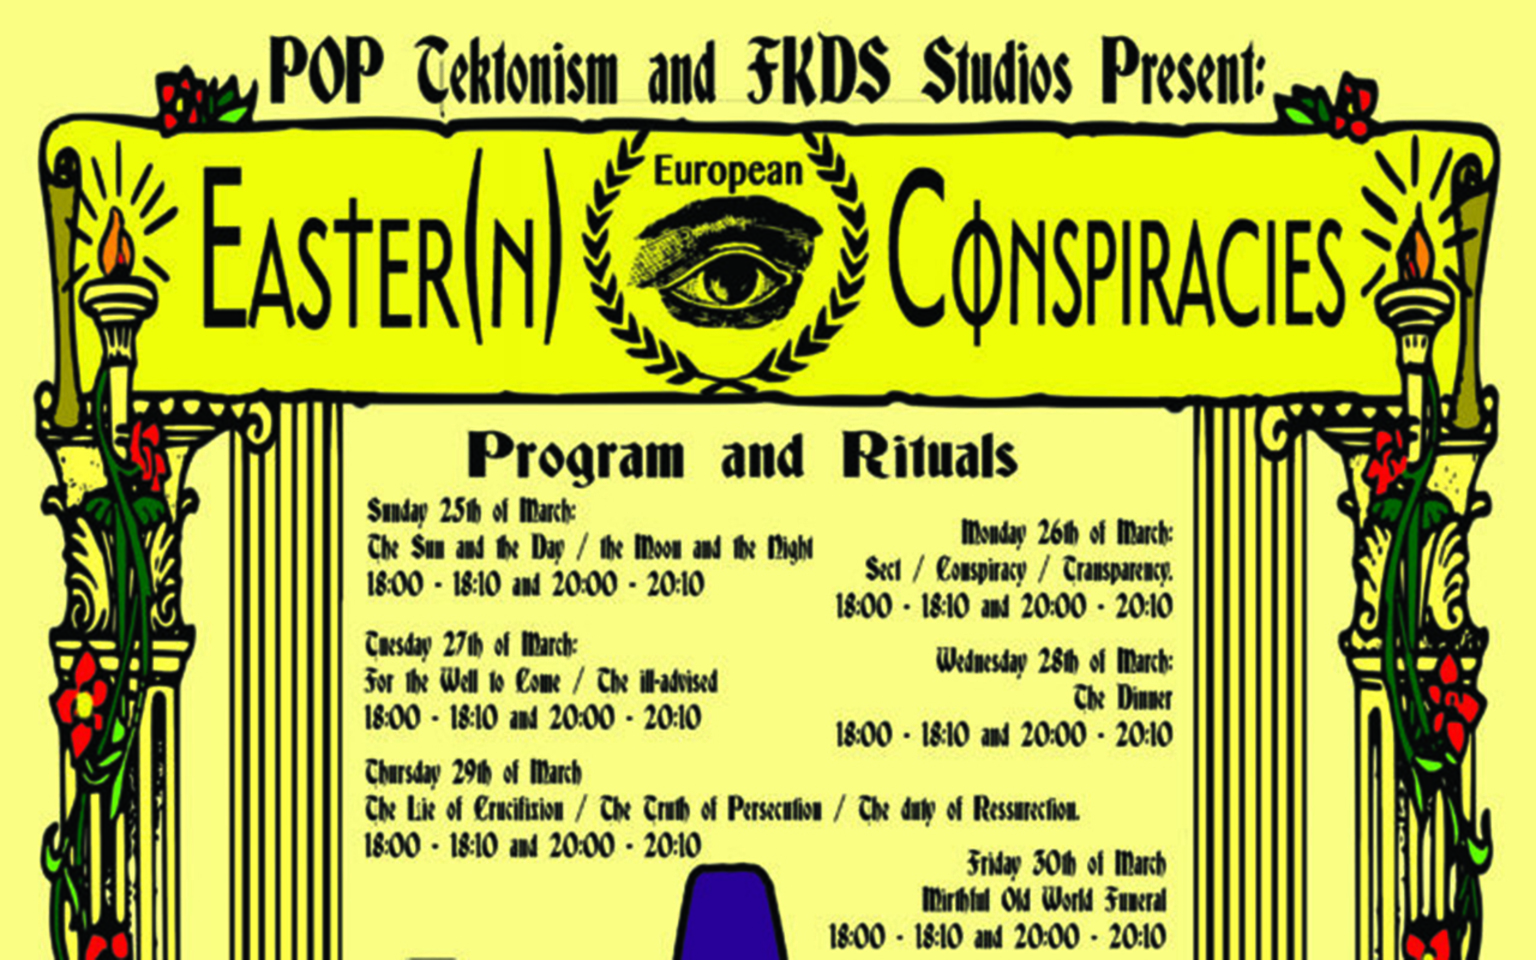 Akademirommet: Easter(n) European Conspiracies